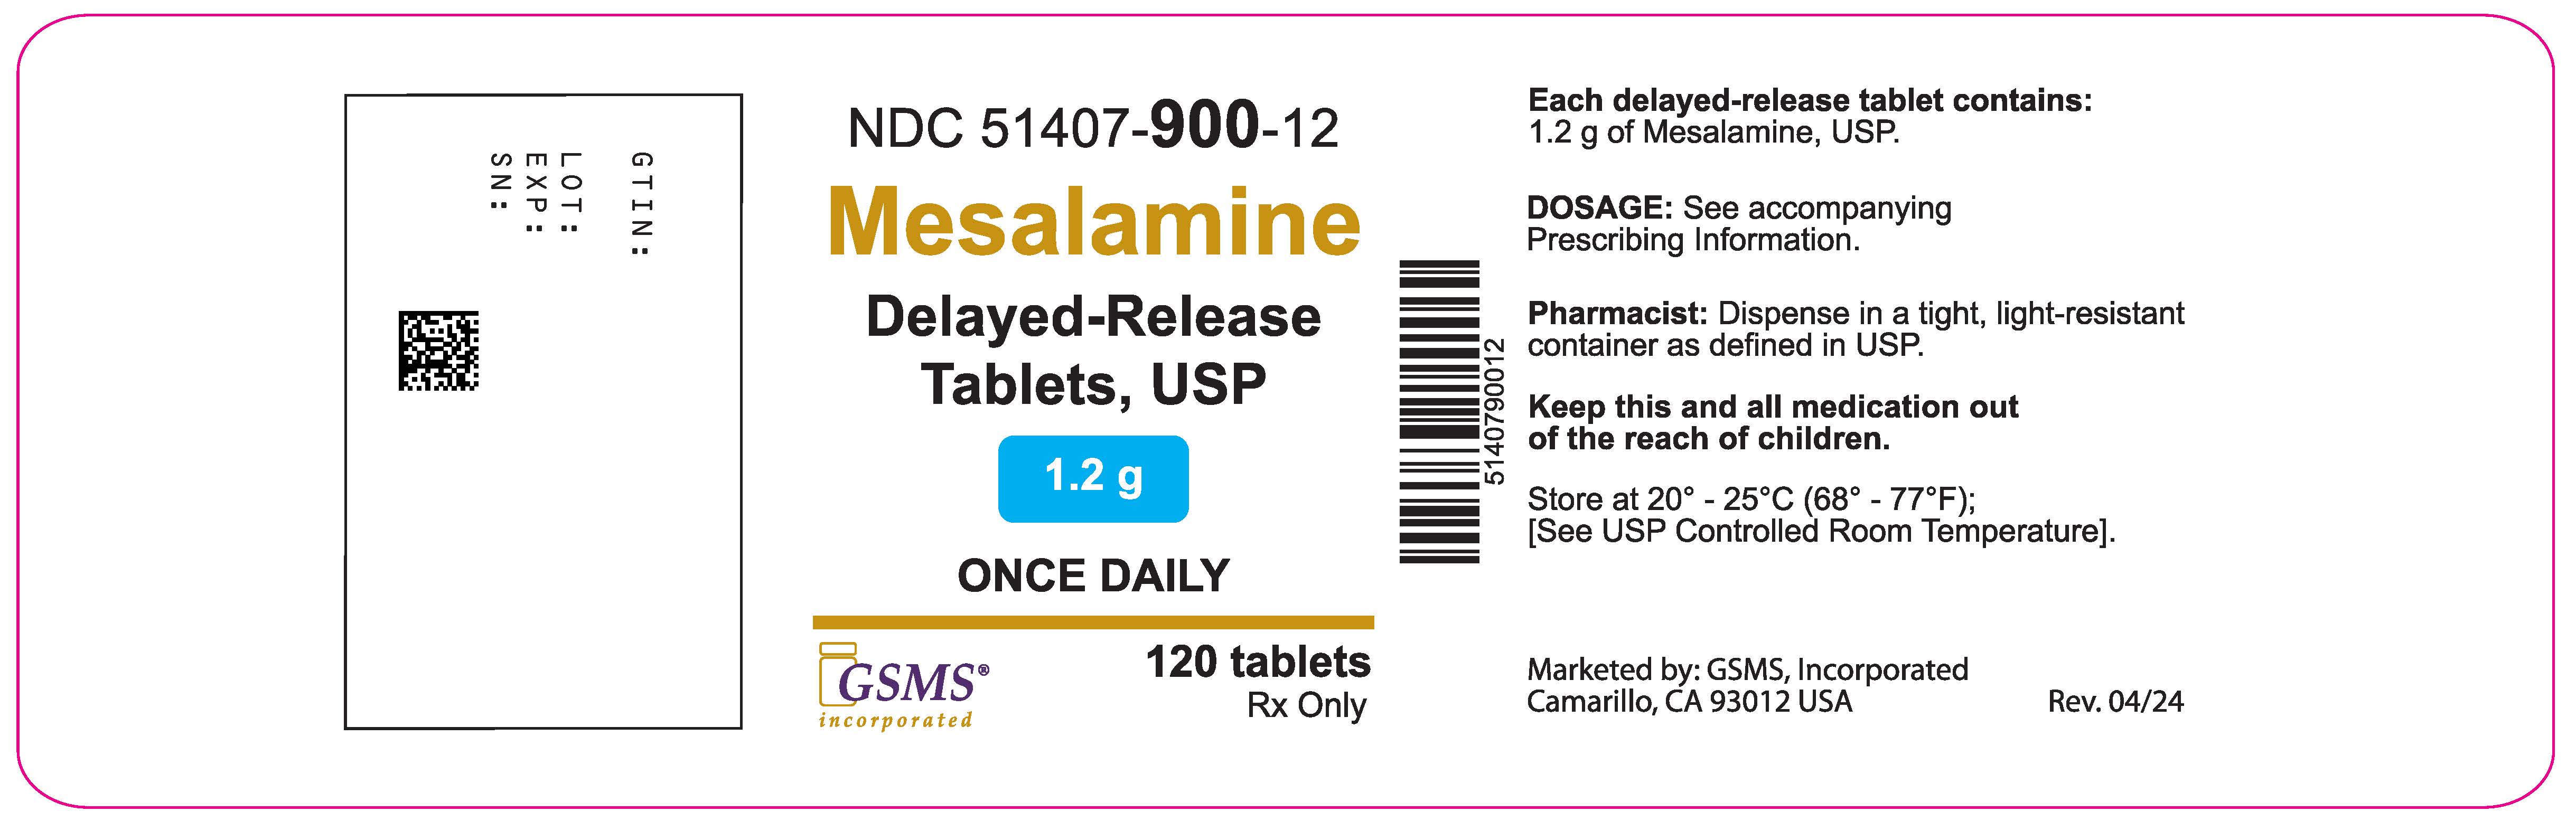 51407-900-12OL - Mesalamine DR 1.2g - Rev. 0424.jpg